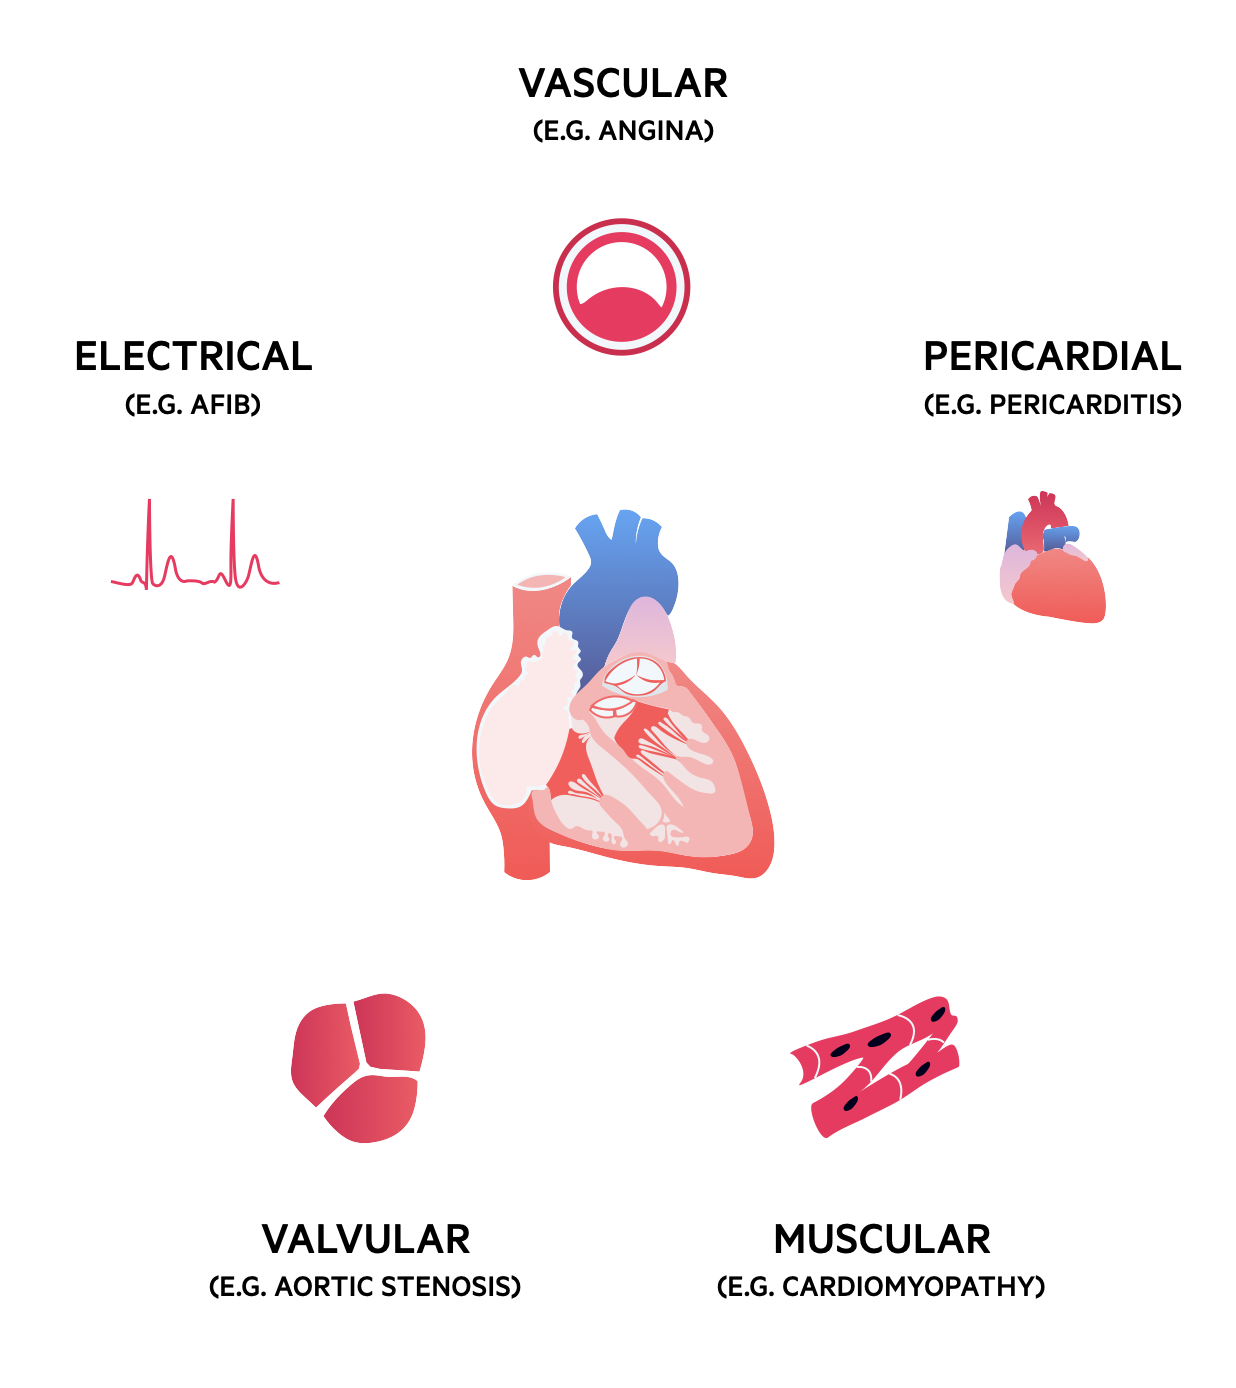 Categorisation of cardiac disease